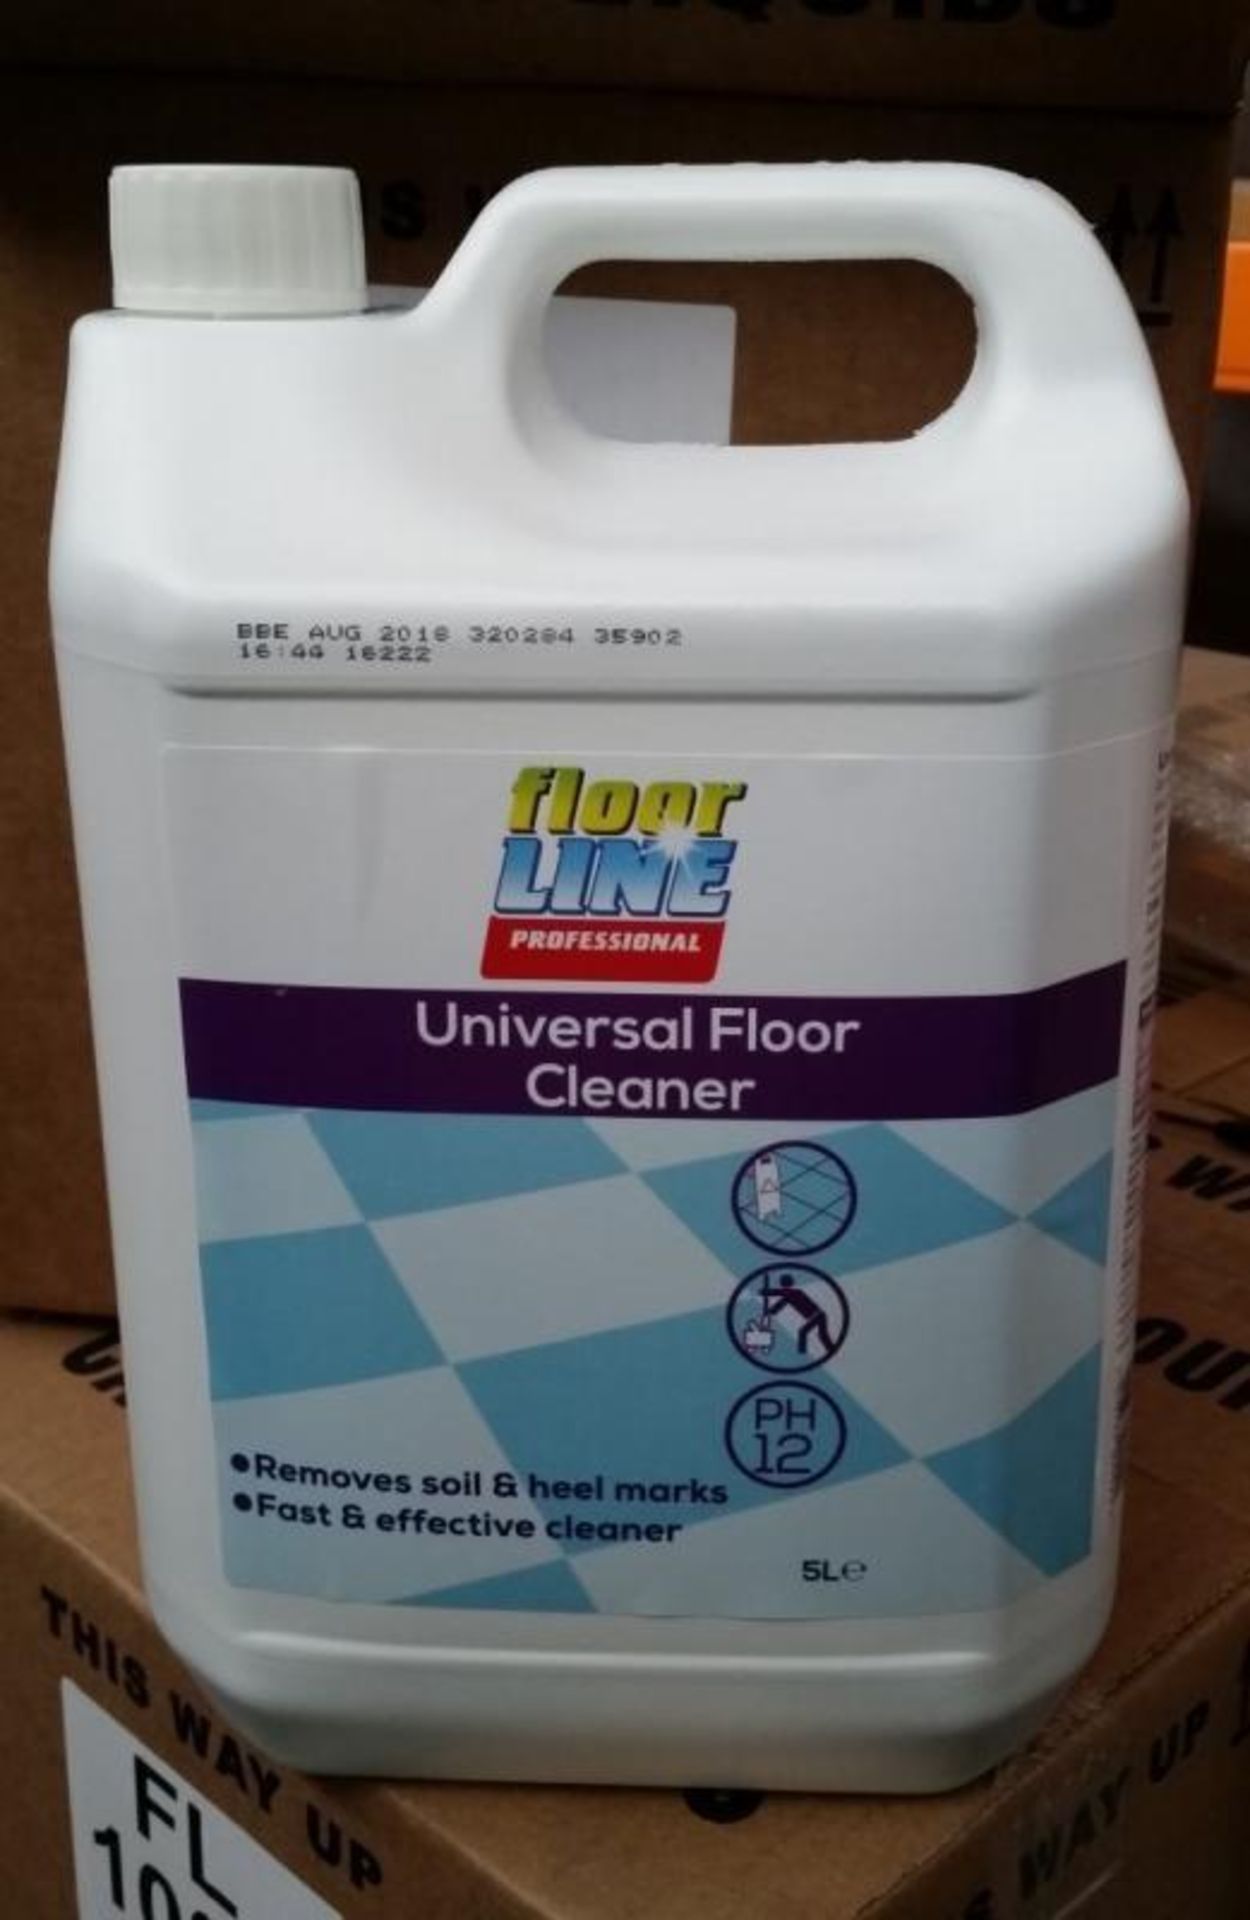 2 x Floor Line Professional 5 Litre Universal Floor Cleaner - Removes Soil & Heel Marks - Fast & Eff - Image 6 of 7